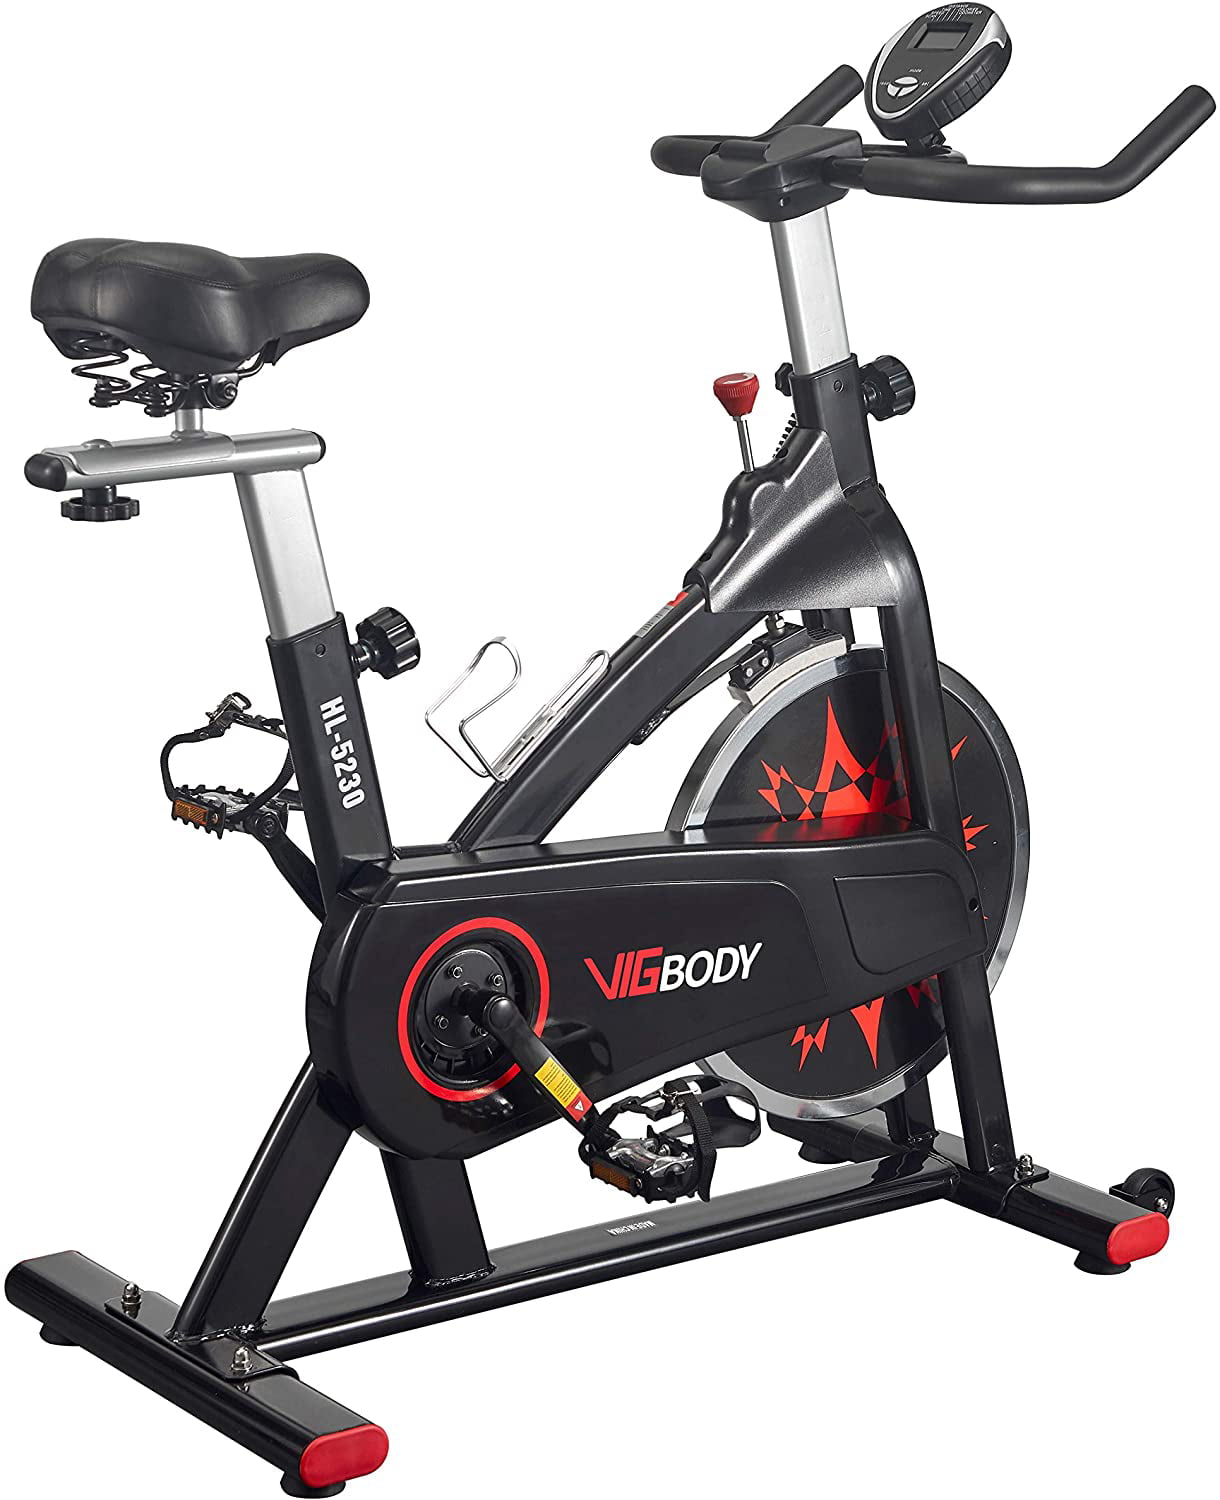 vigbody exercise bike indoor cycling bike adjustable stationary bicycle for home gym workout cardio bikes upright bike